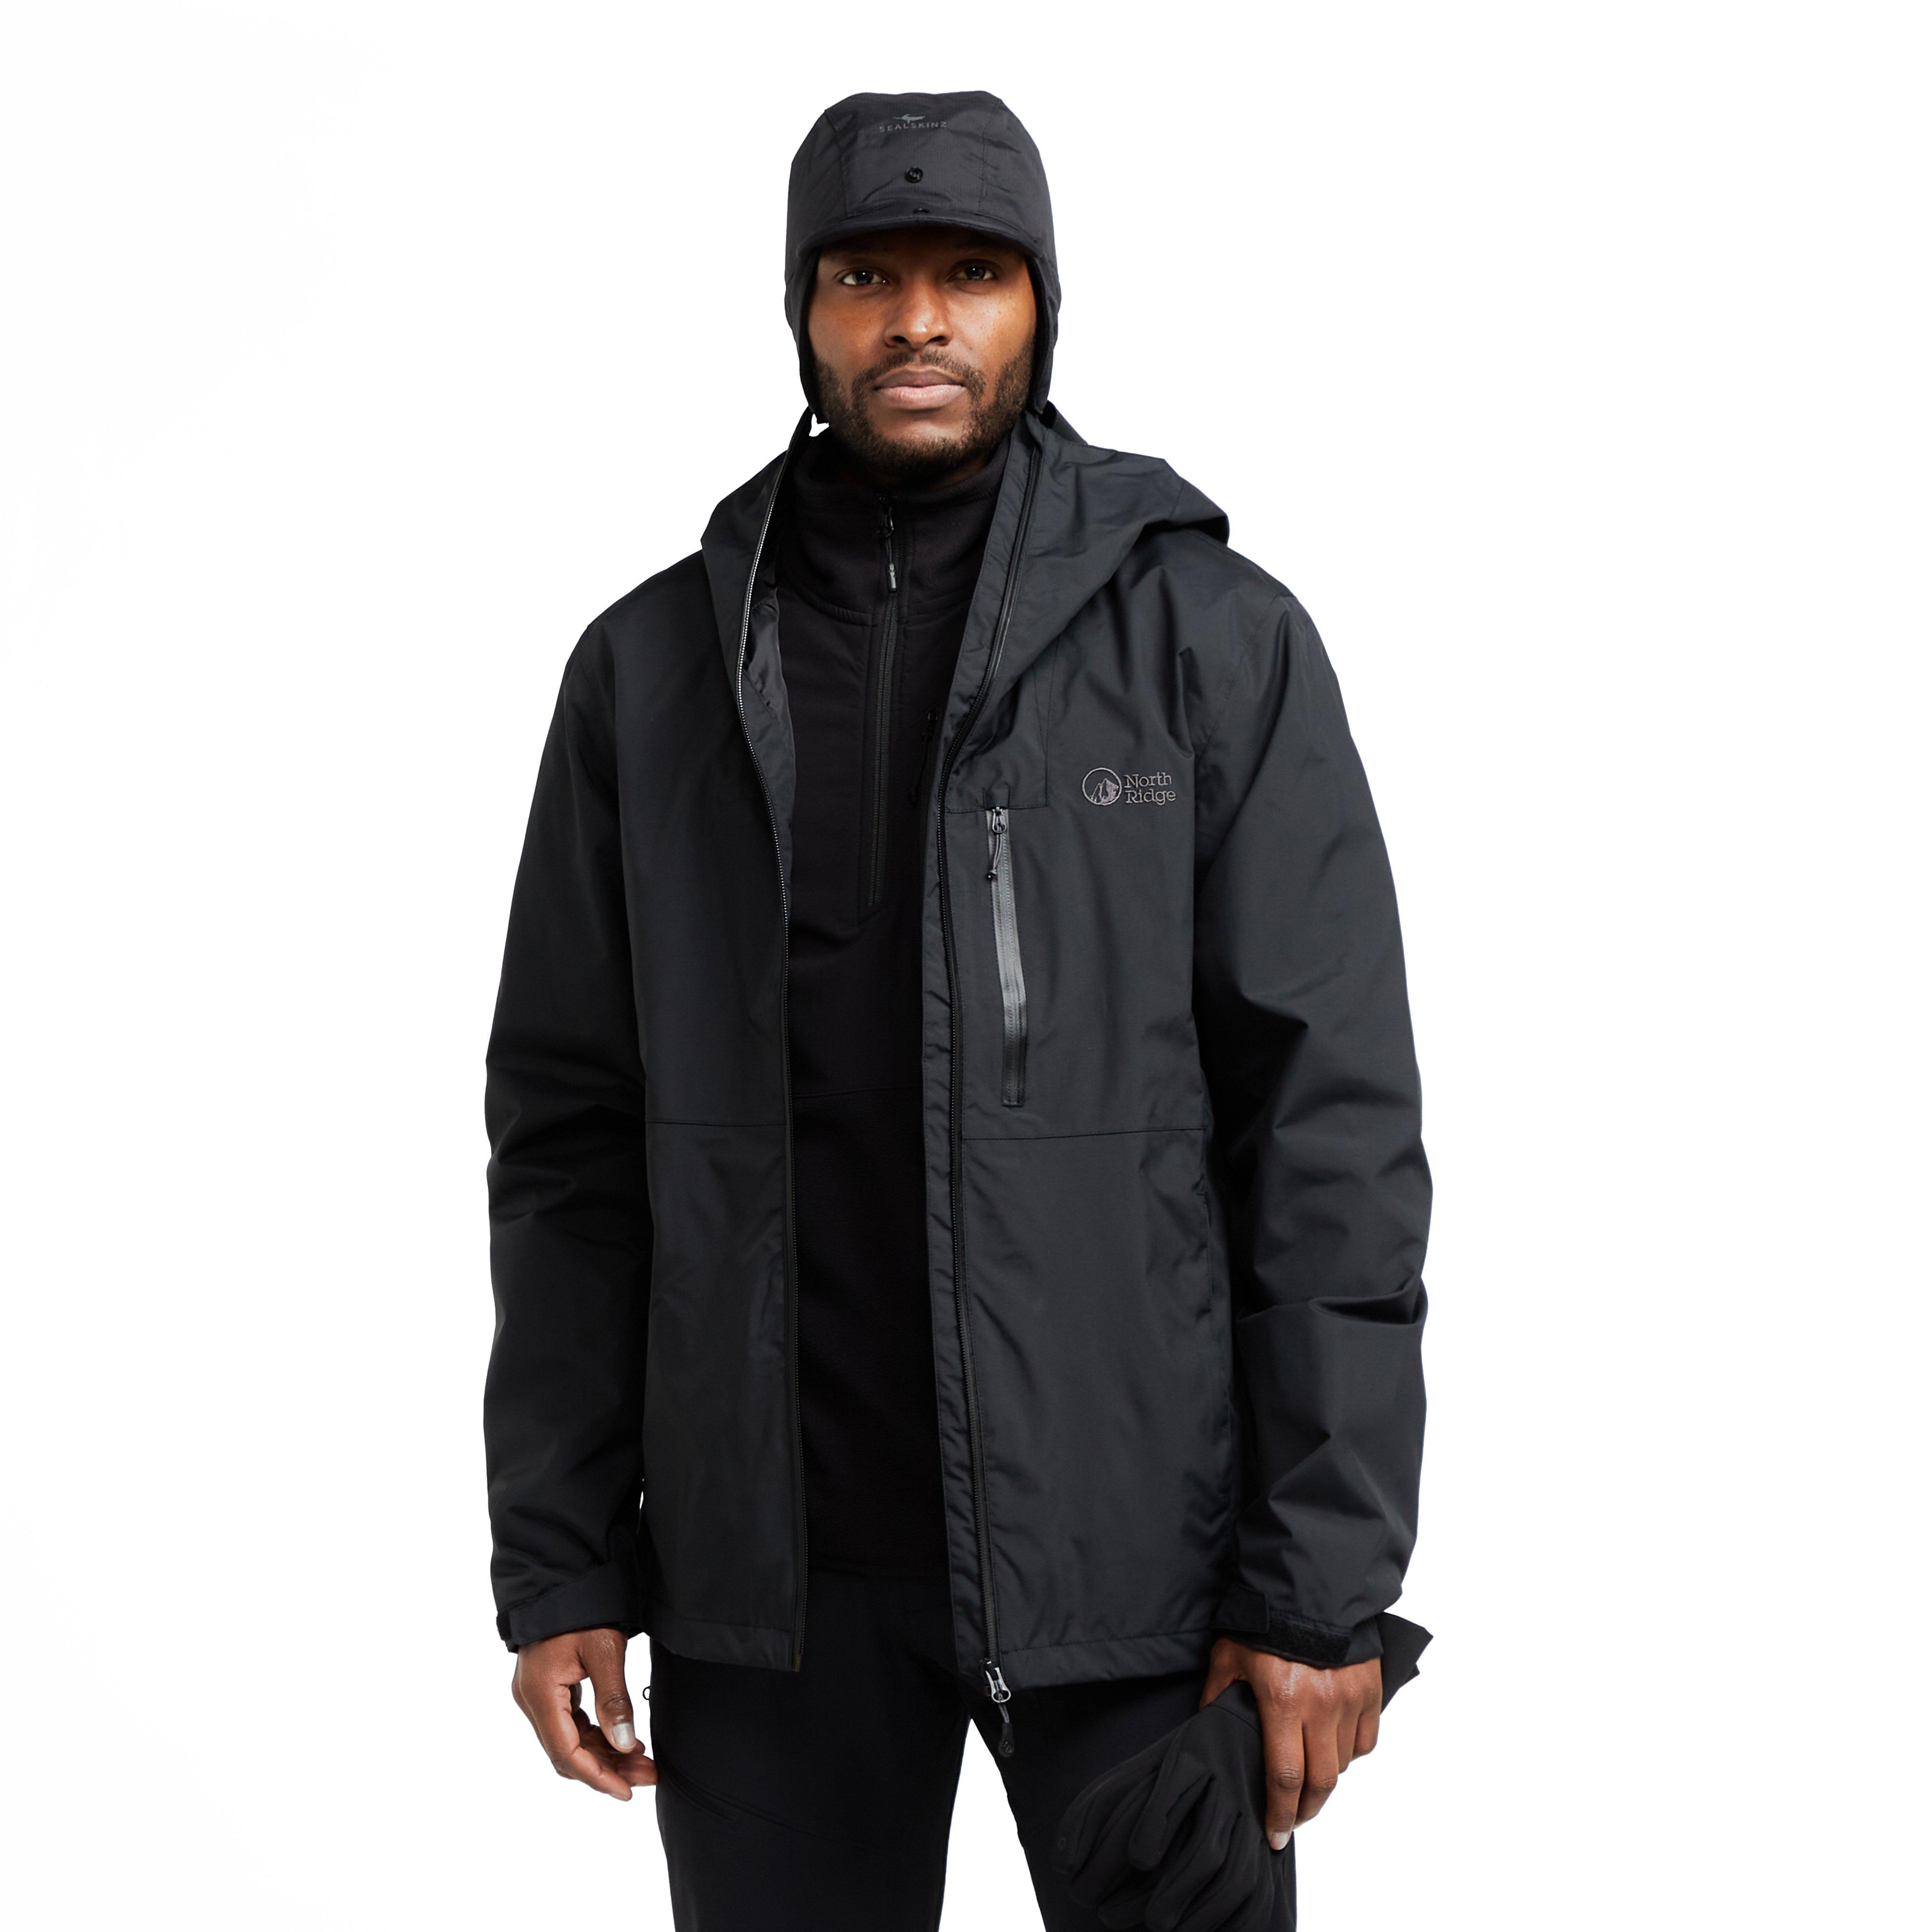 North Ridge Men’s Waterproof Comfortable Shoalwater 2.0 Jacket with Peaked Hood